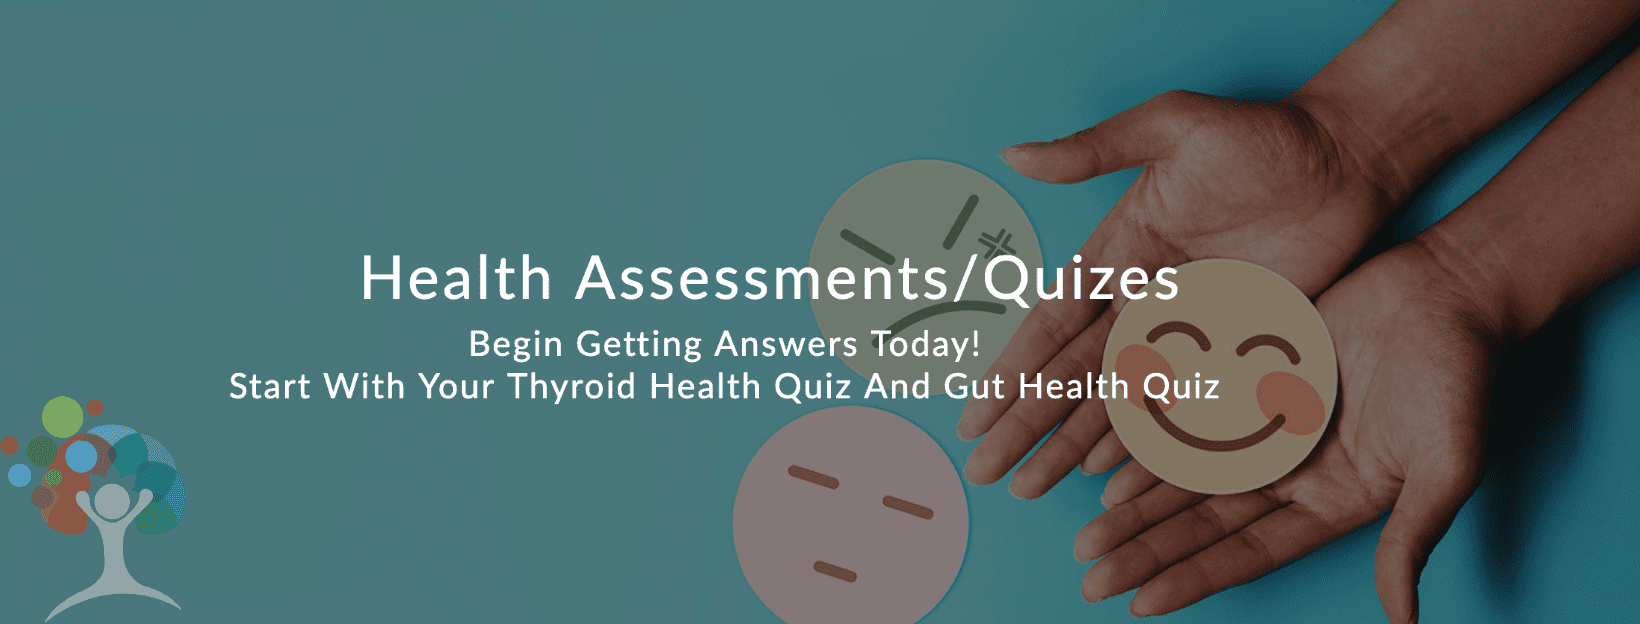 Thyroid Health Quiz Gut Health Quiz Health Assessments